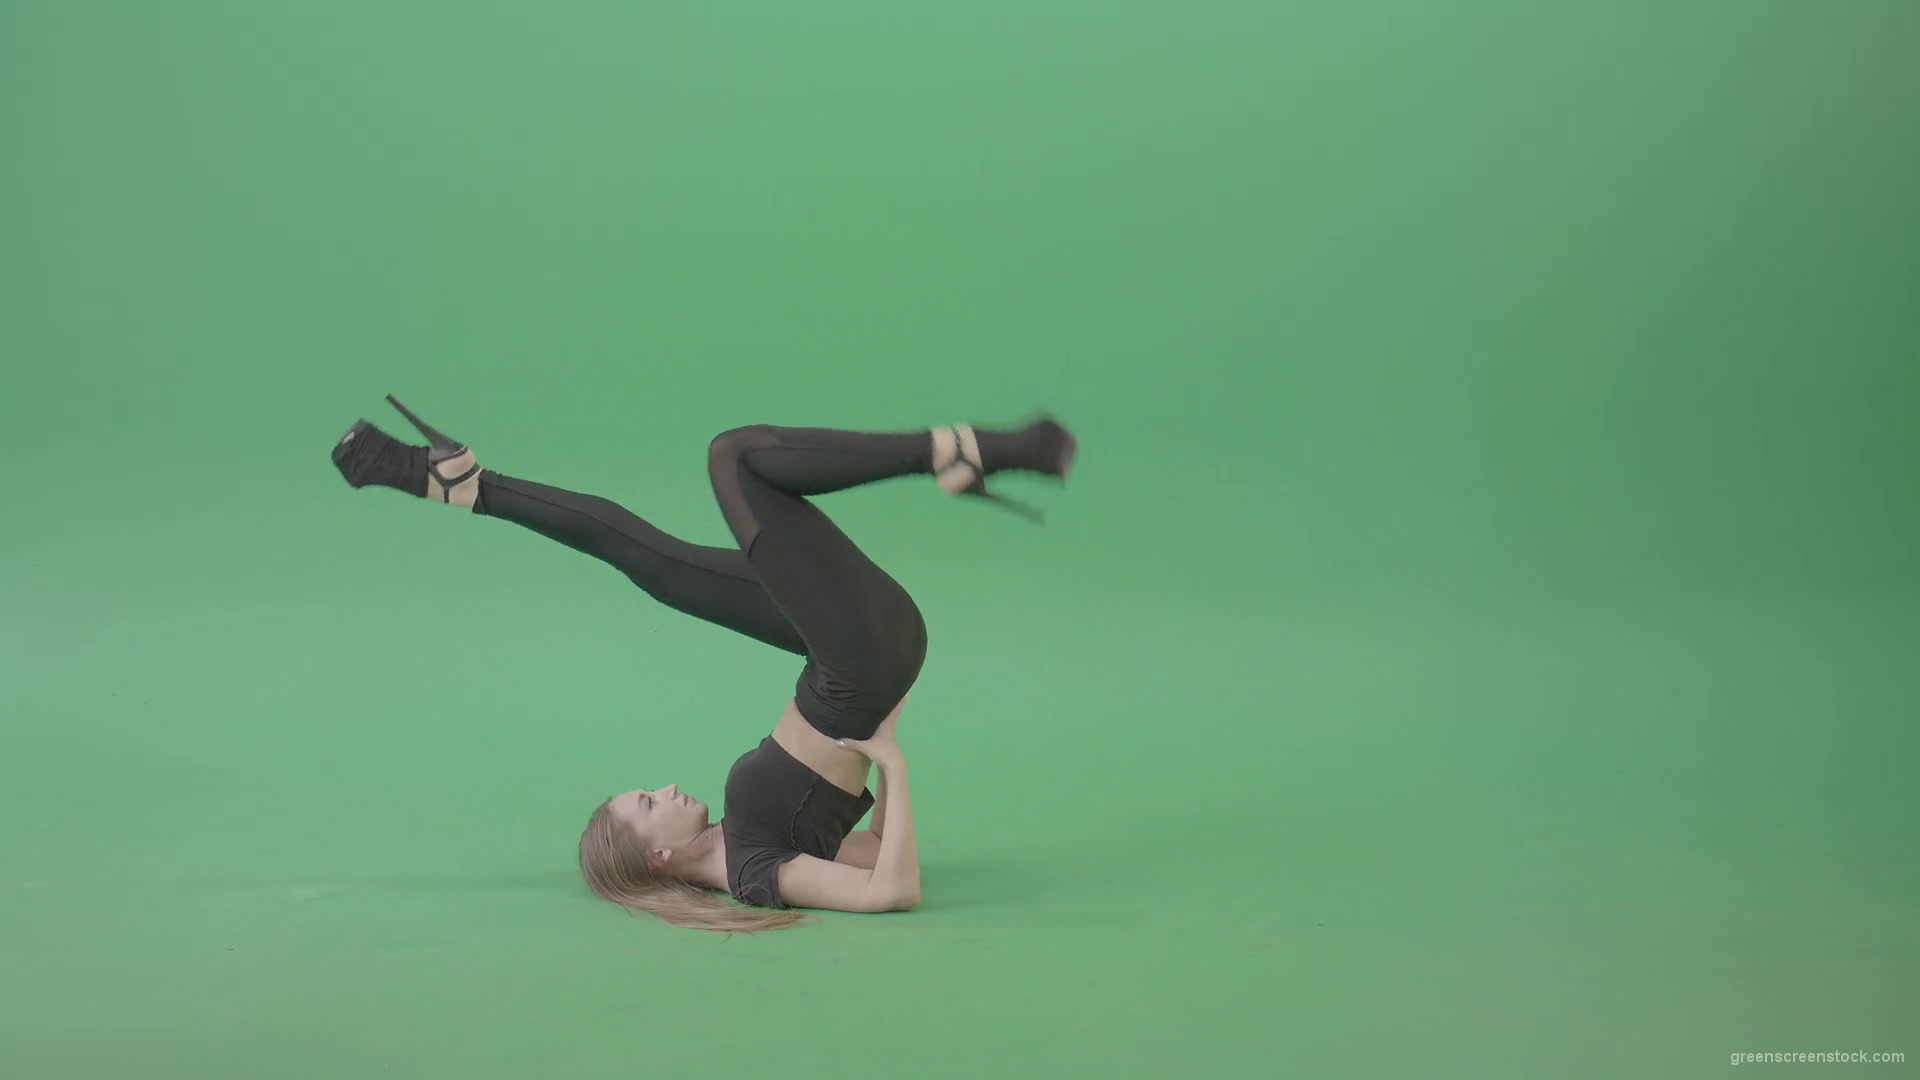 Girl-on-green-screen-in-side-view-make-legs-dance-4K-Video-Footage-1920_002 Green Screen Stock